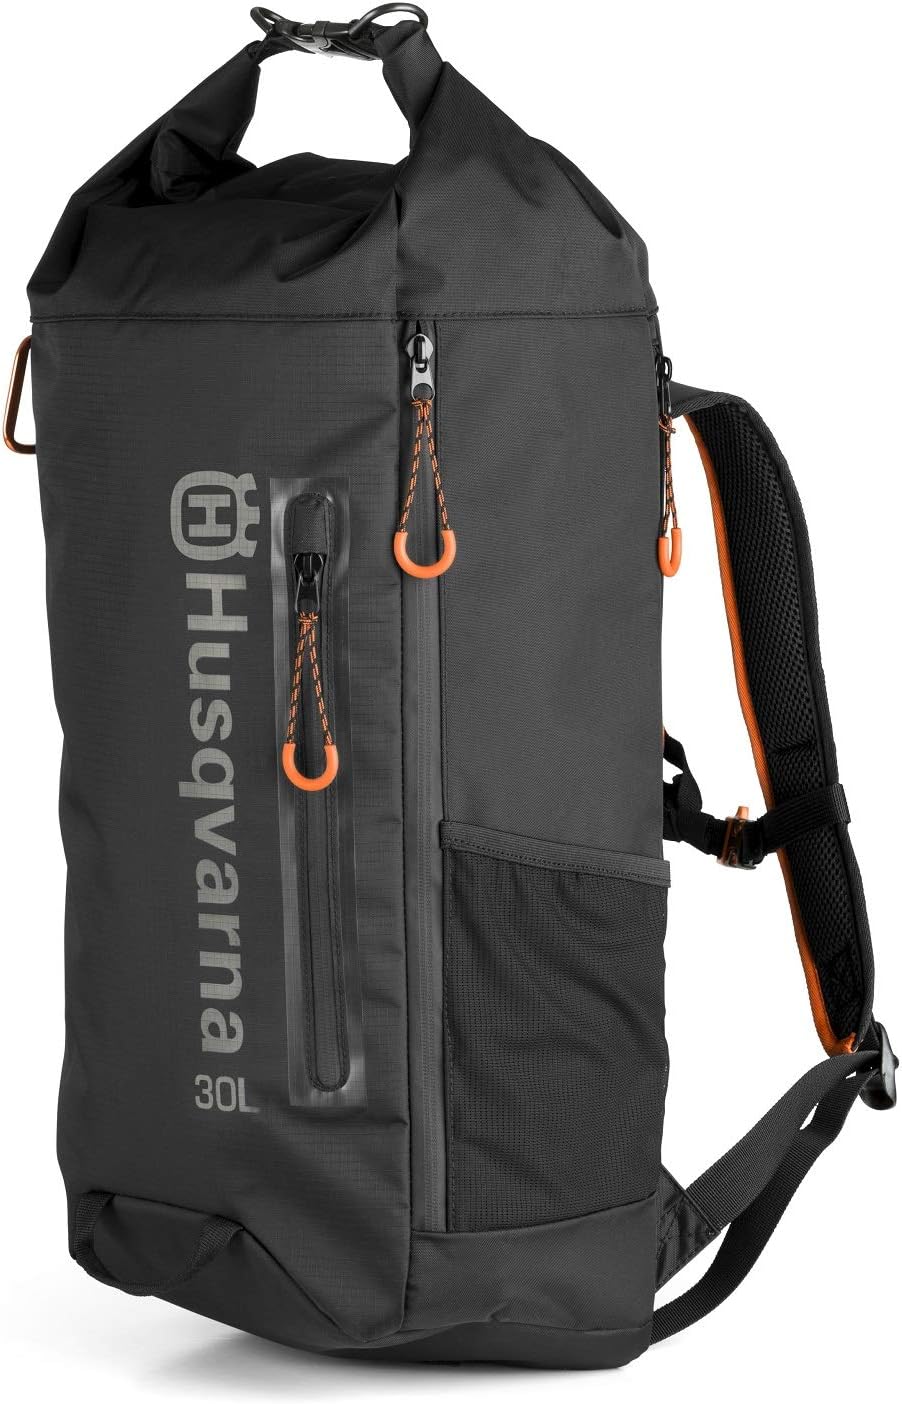 Backpack Xplorer Husqvarna 30L